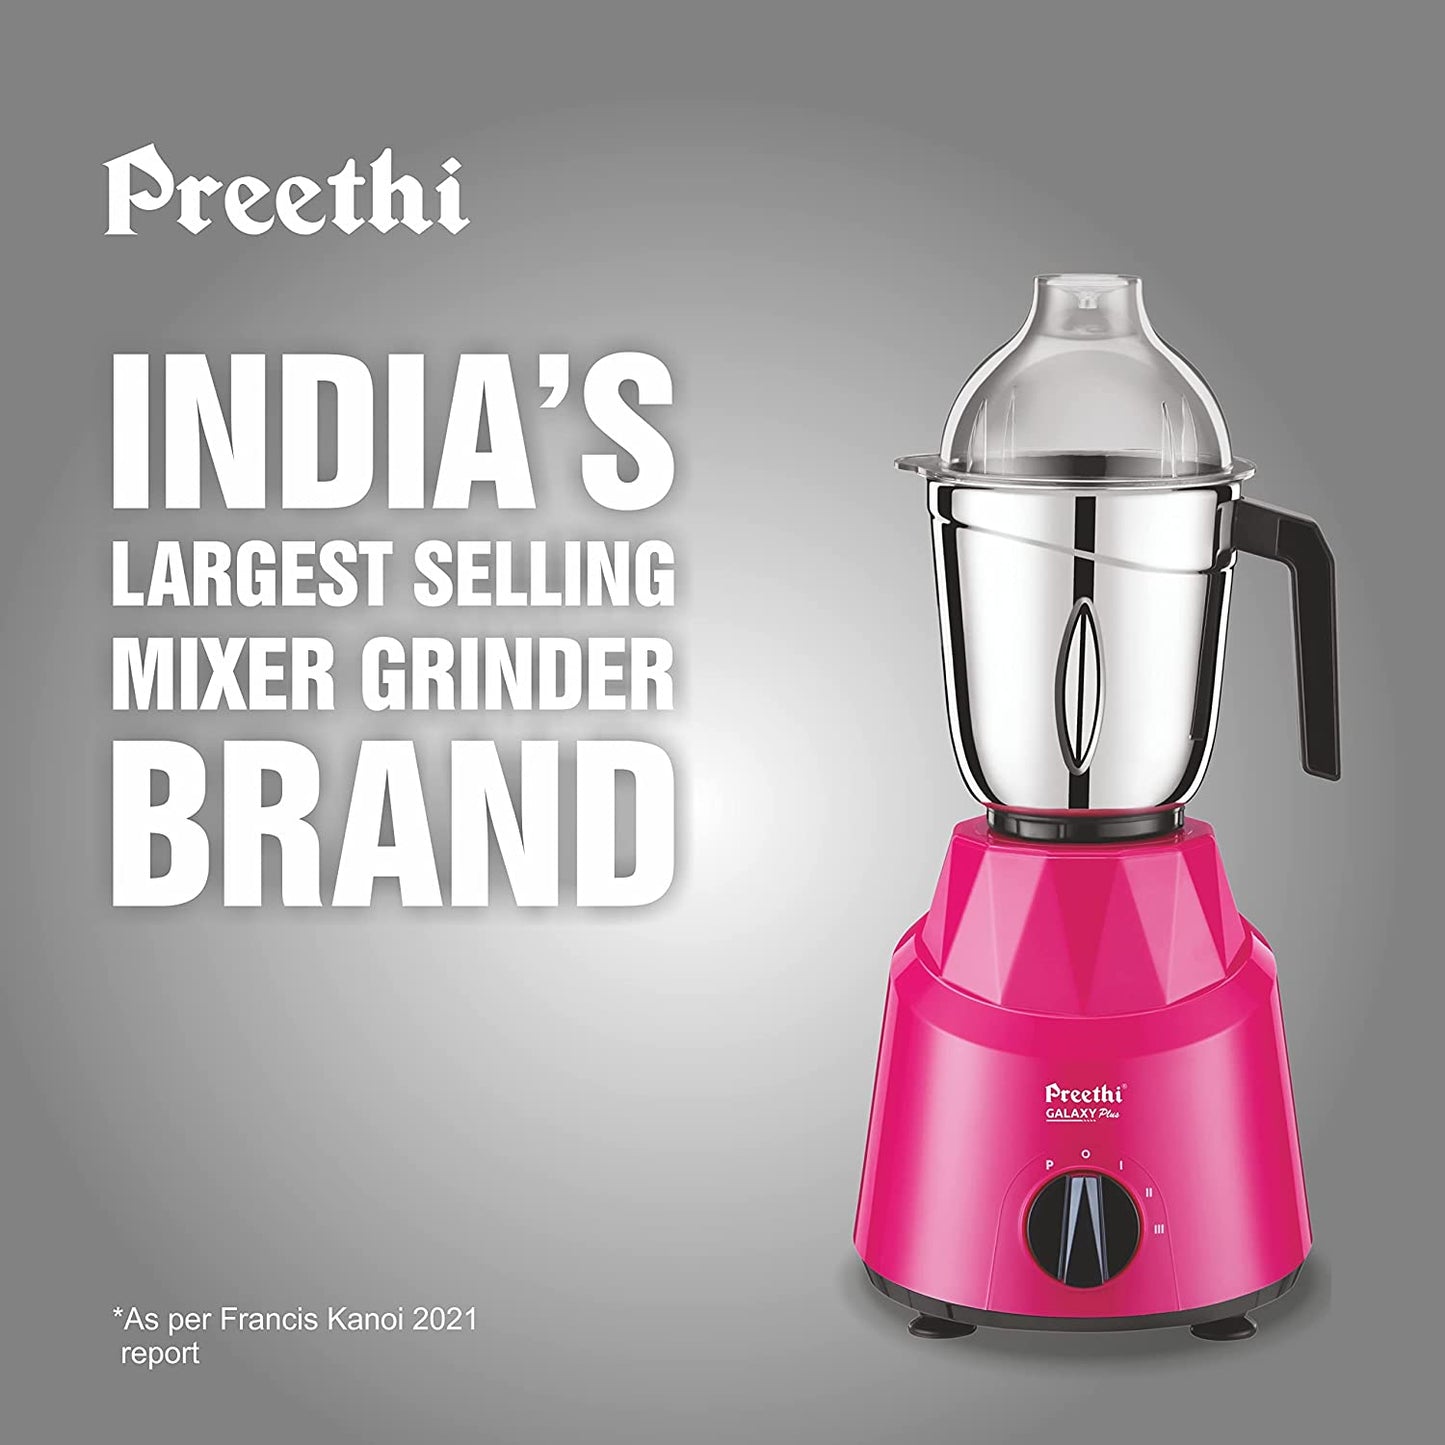 Preethi Galaxy Plus MG-250 Mixer grinder, 750W, 4 Jar